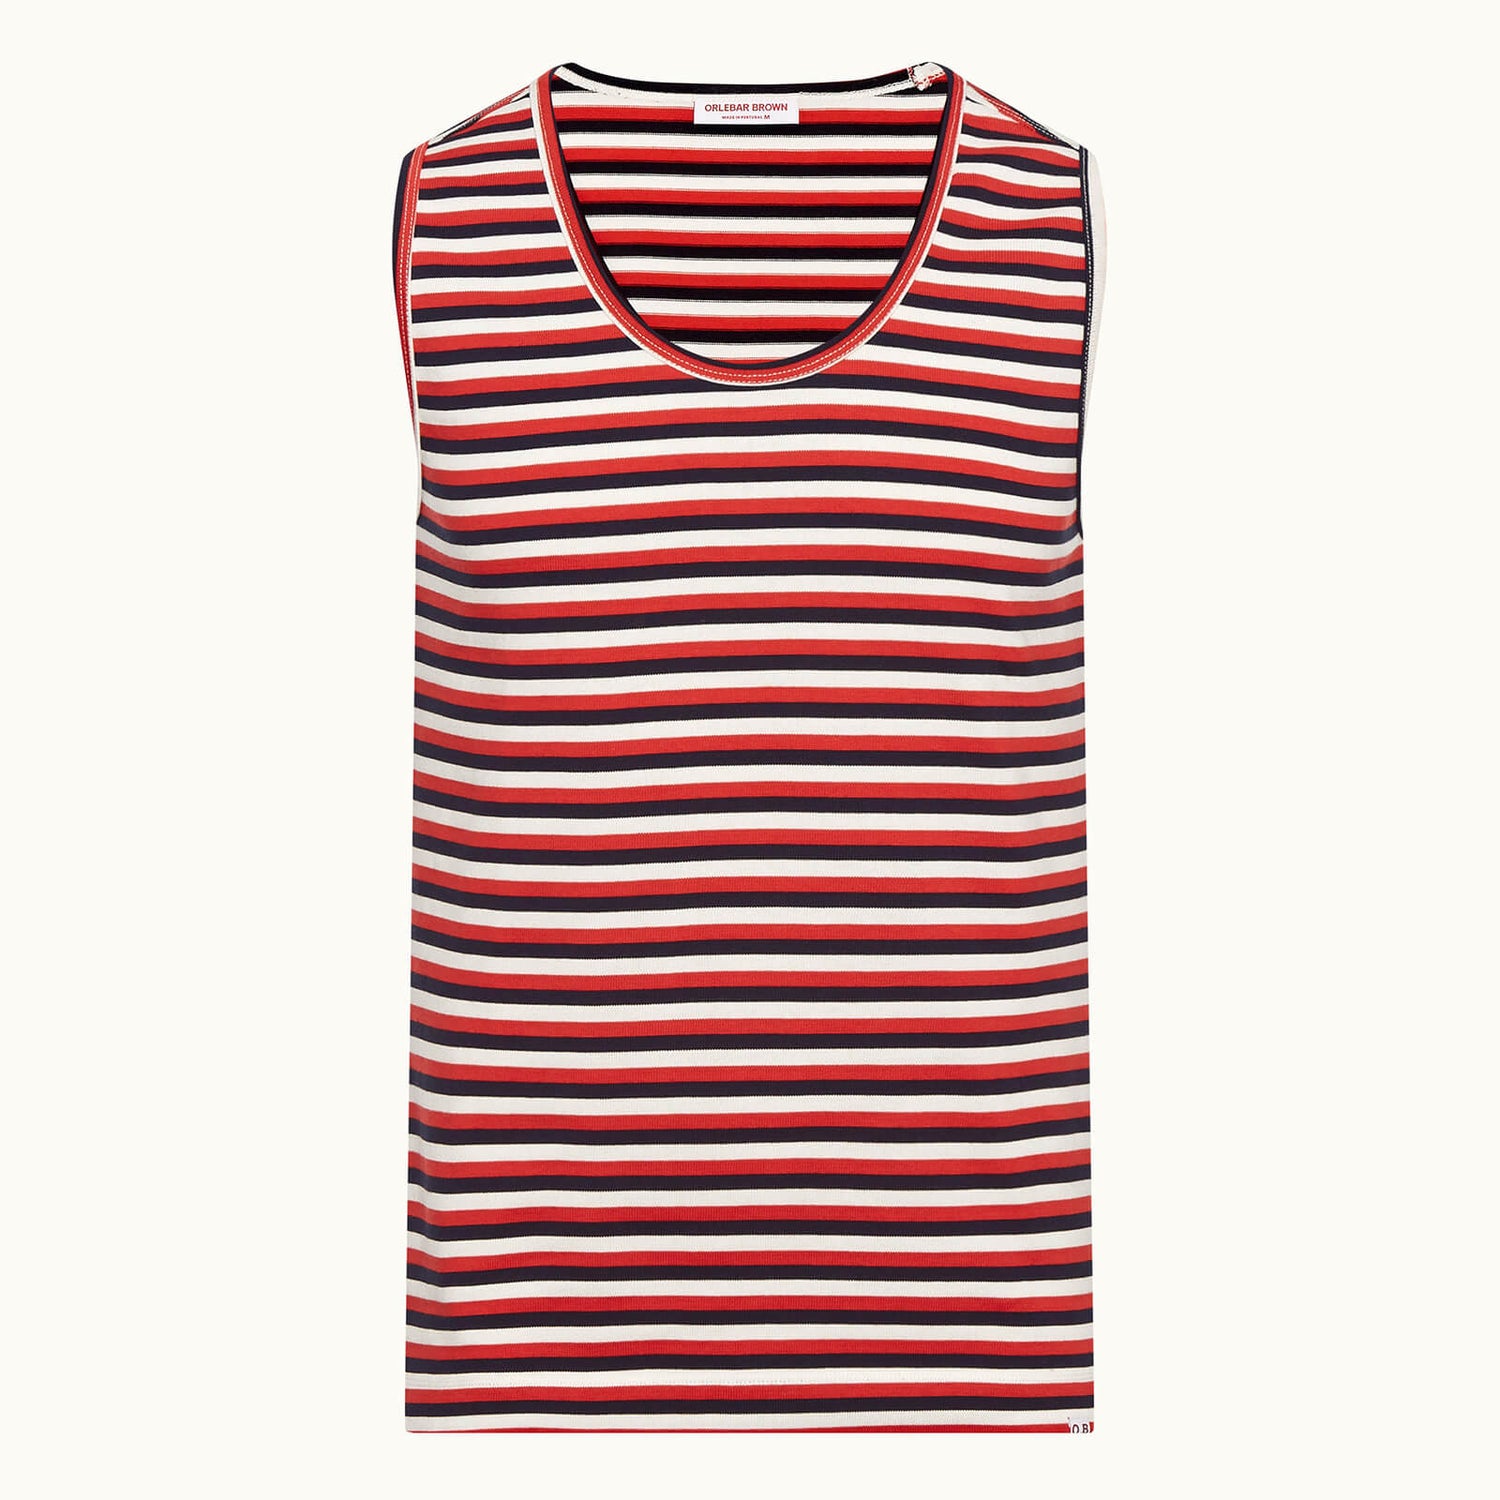 CHERBURY BOARDWALK STRIPE 系列条纹无袖棉质 T 恤 - 墨黑色/夏日红色/沙白色